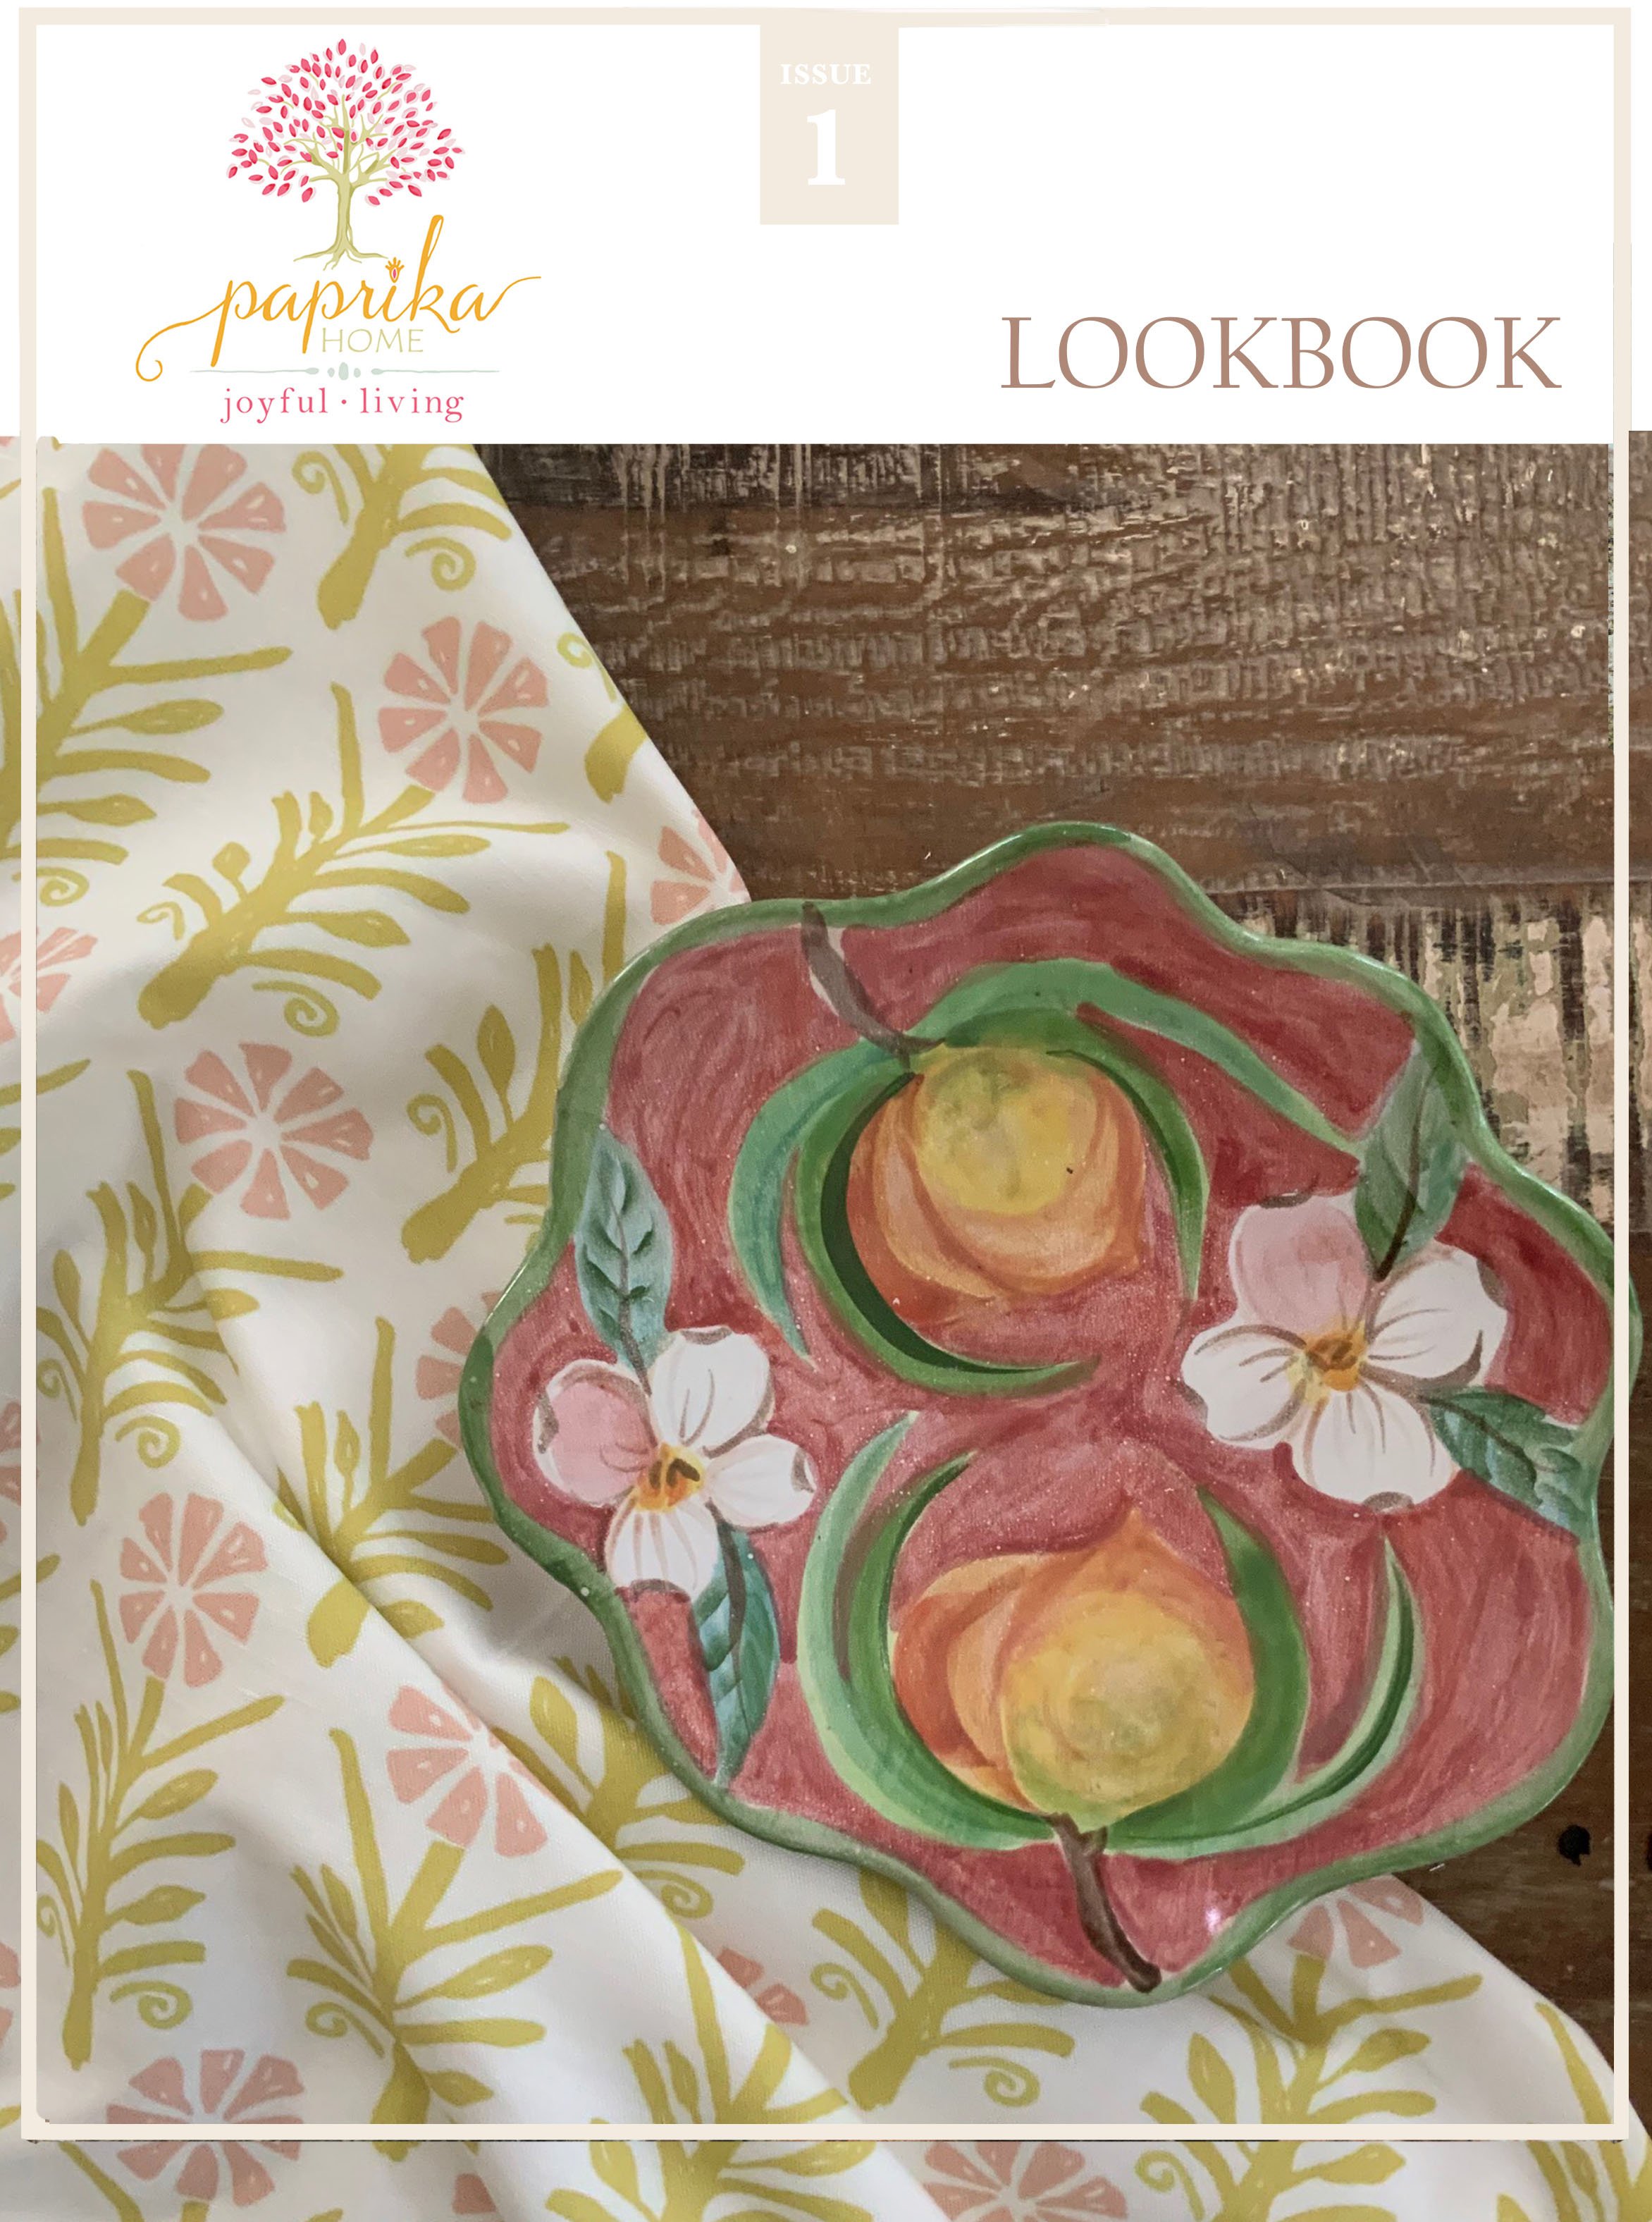 Paprika Home Lookbook 1 cover a.jpg